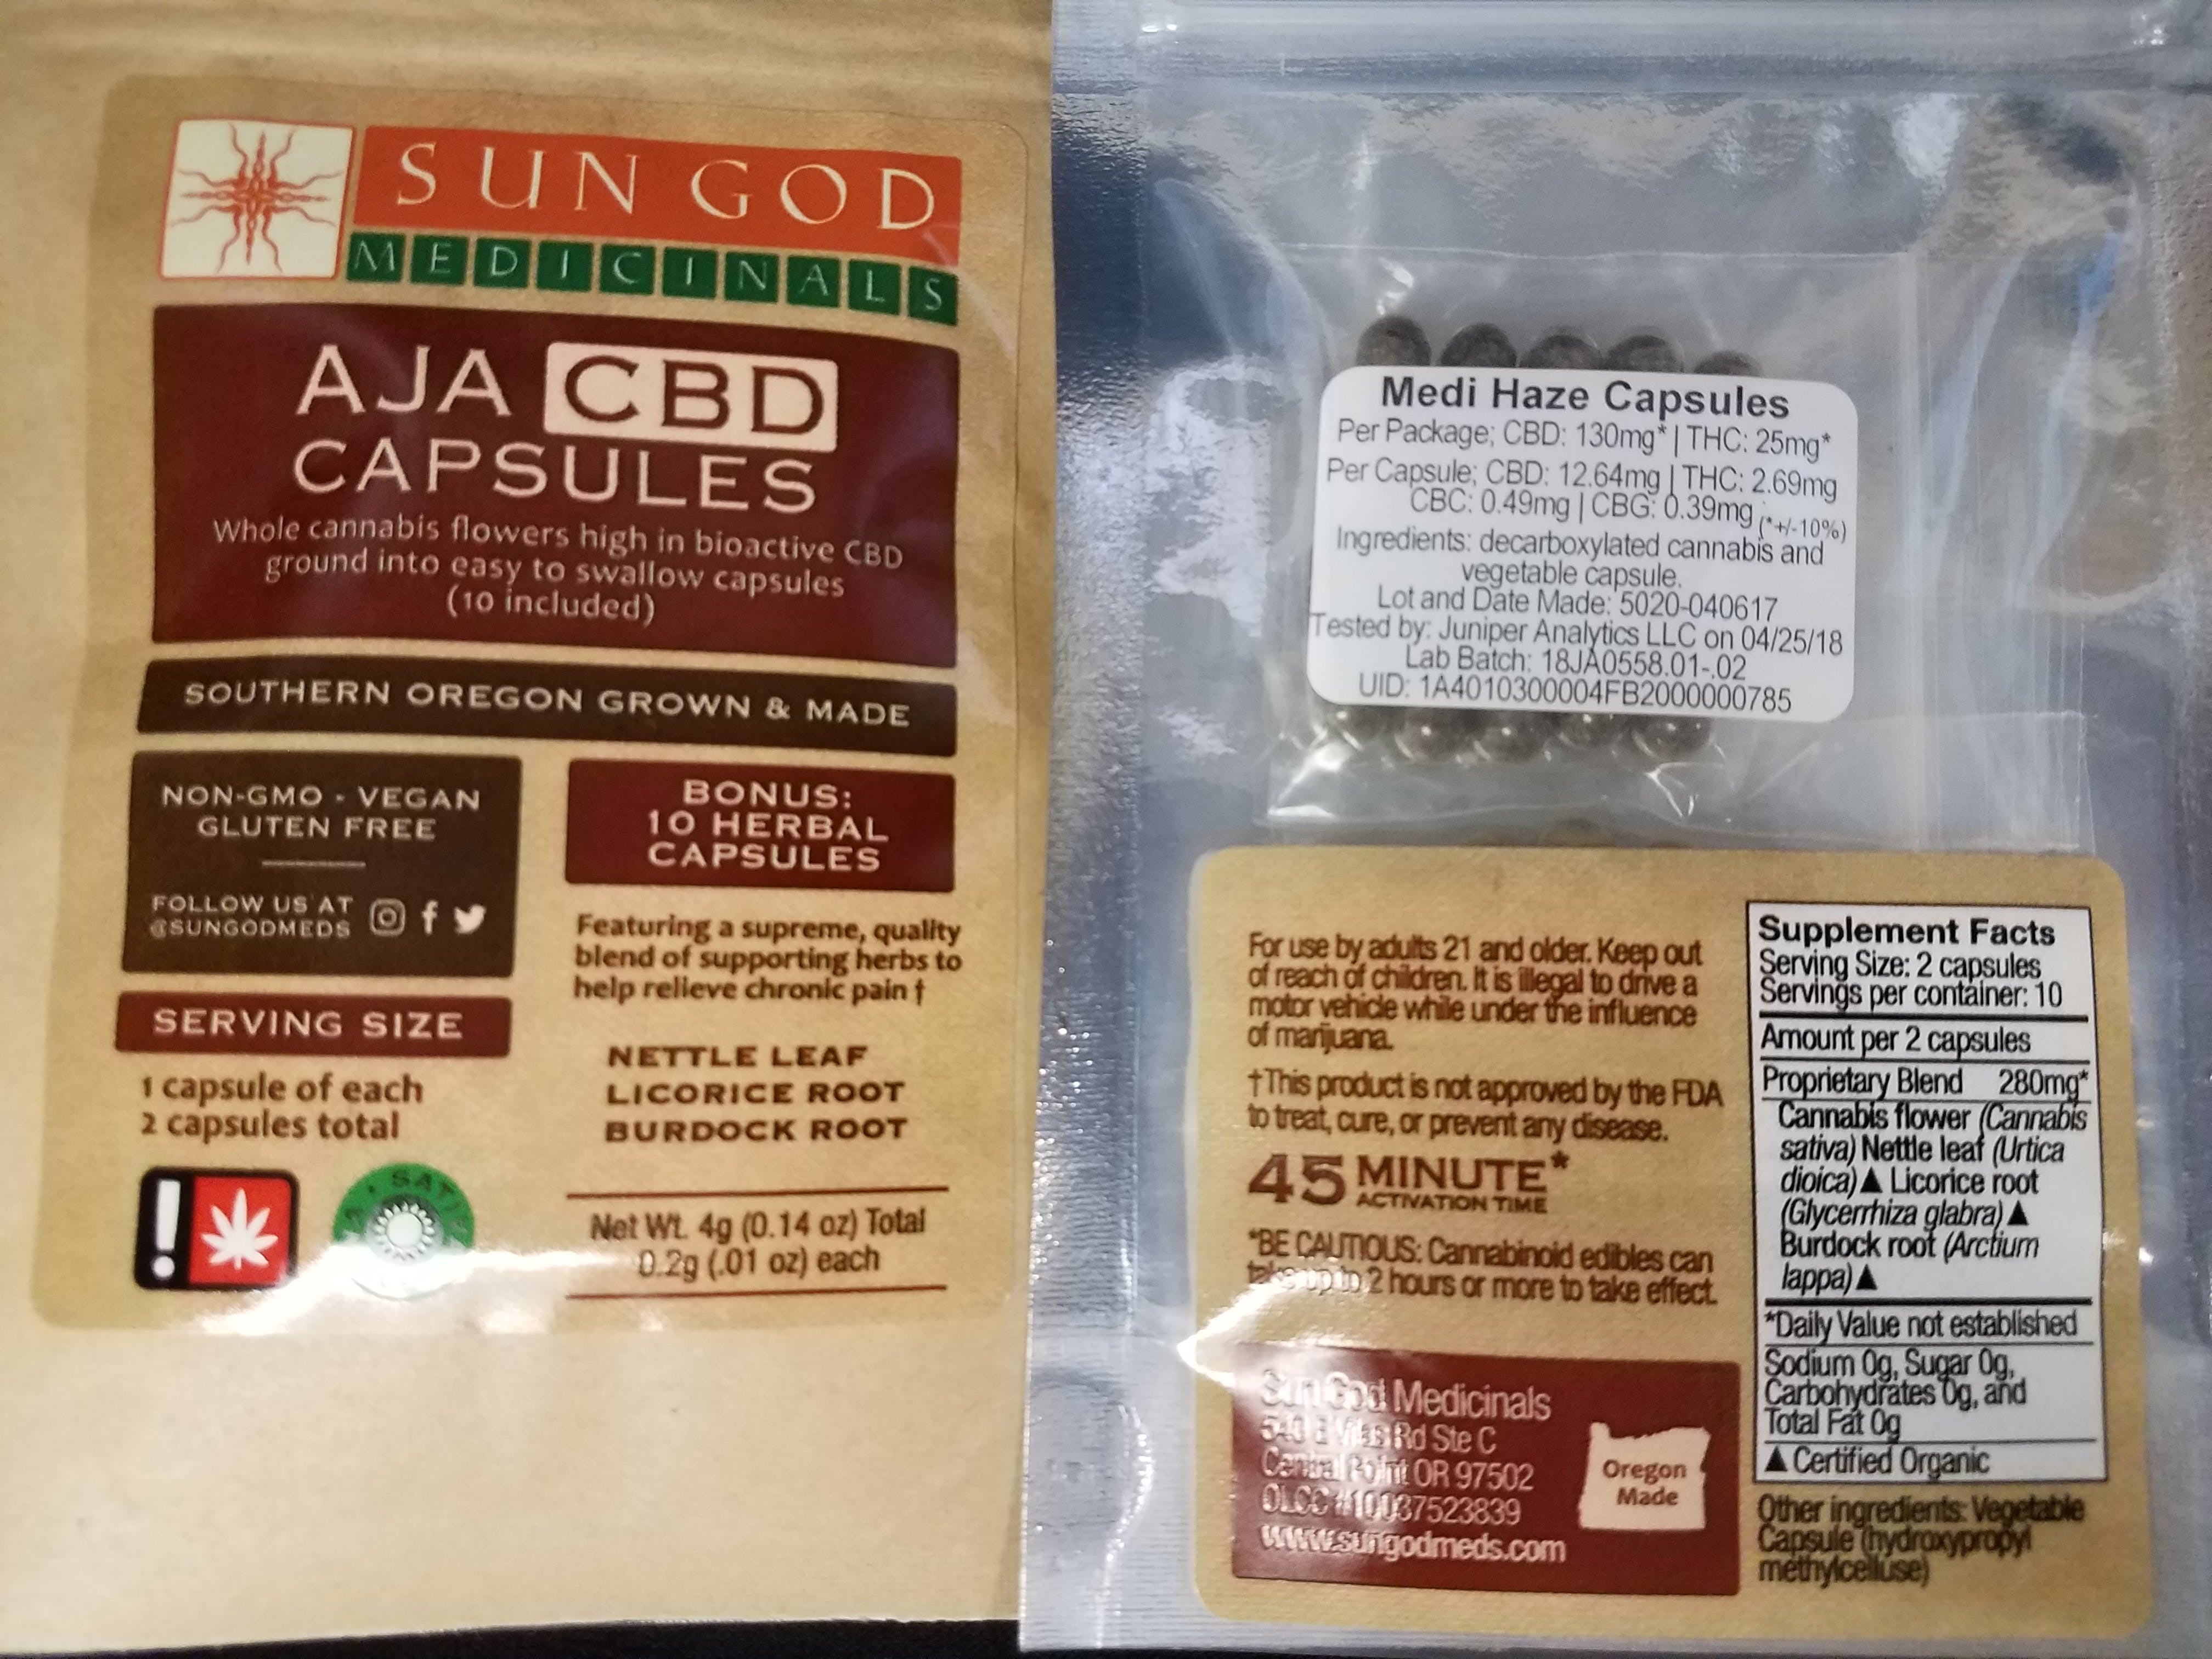 edible-sun-god-aja-cbd-capsules-sativa